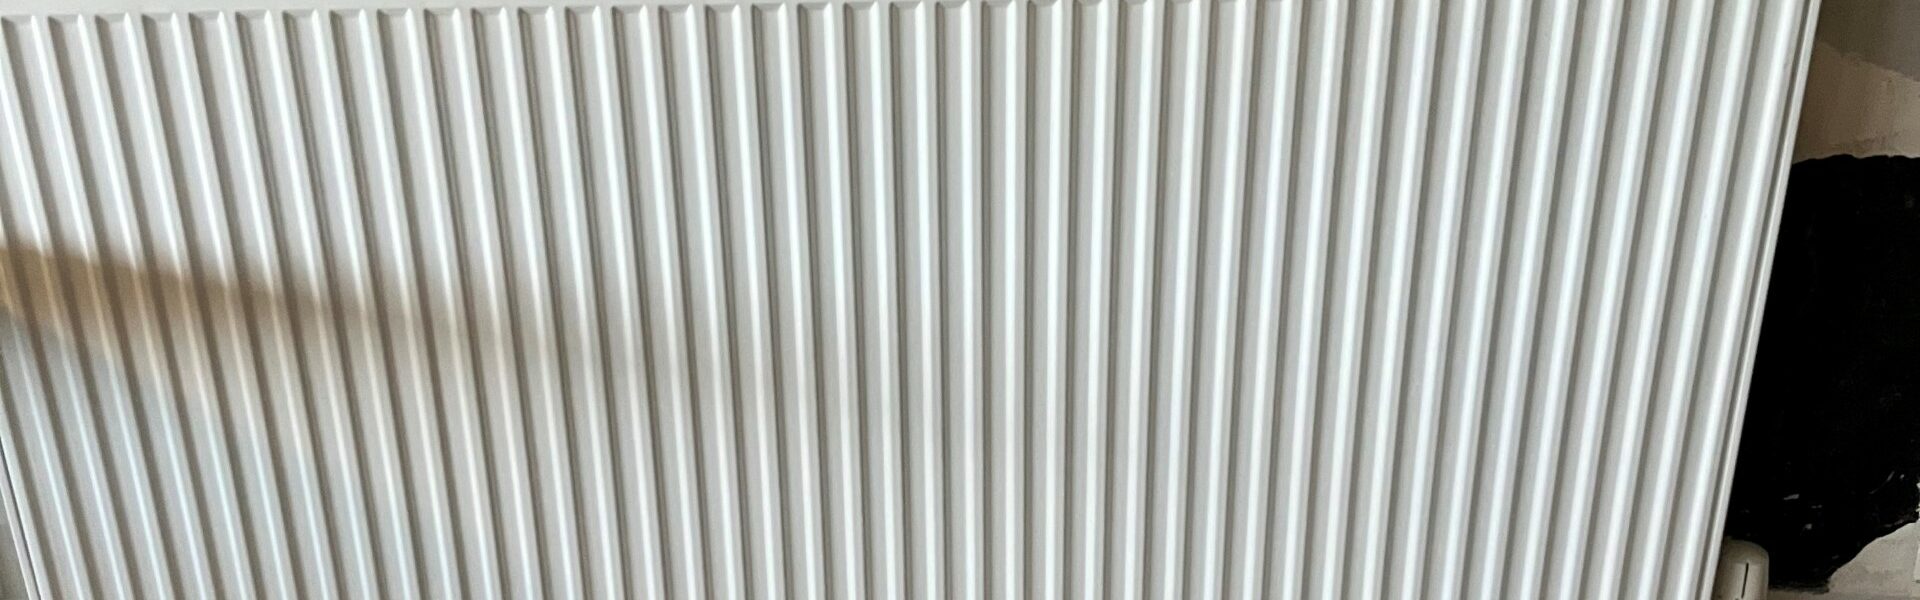 Stelrad provides radiators for Ashington Cricket Club